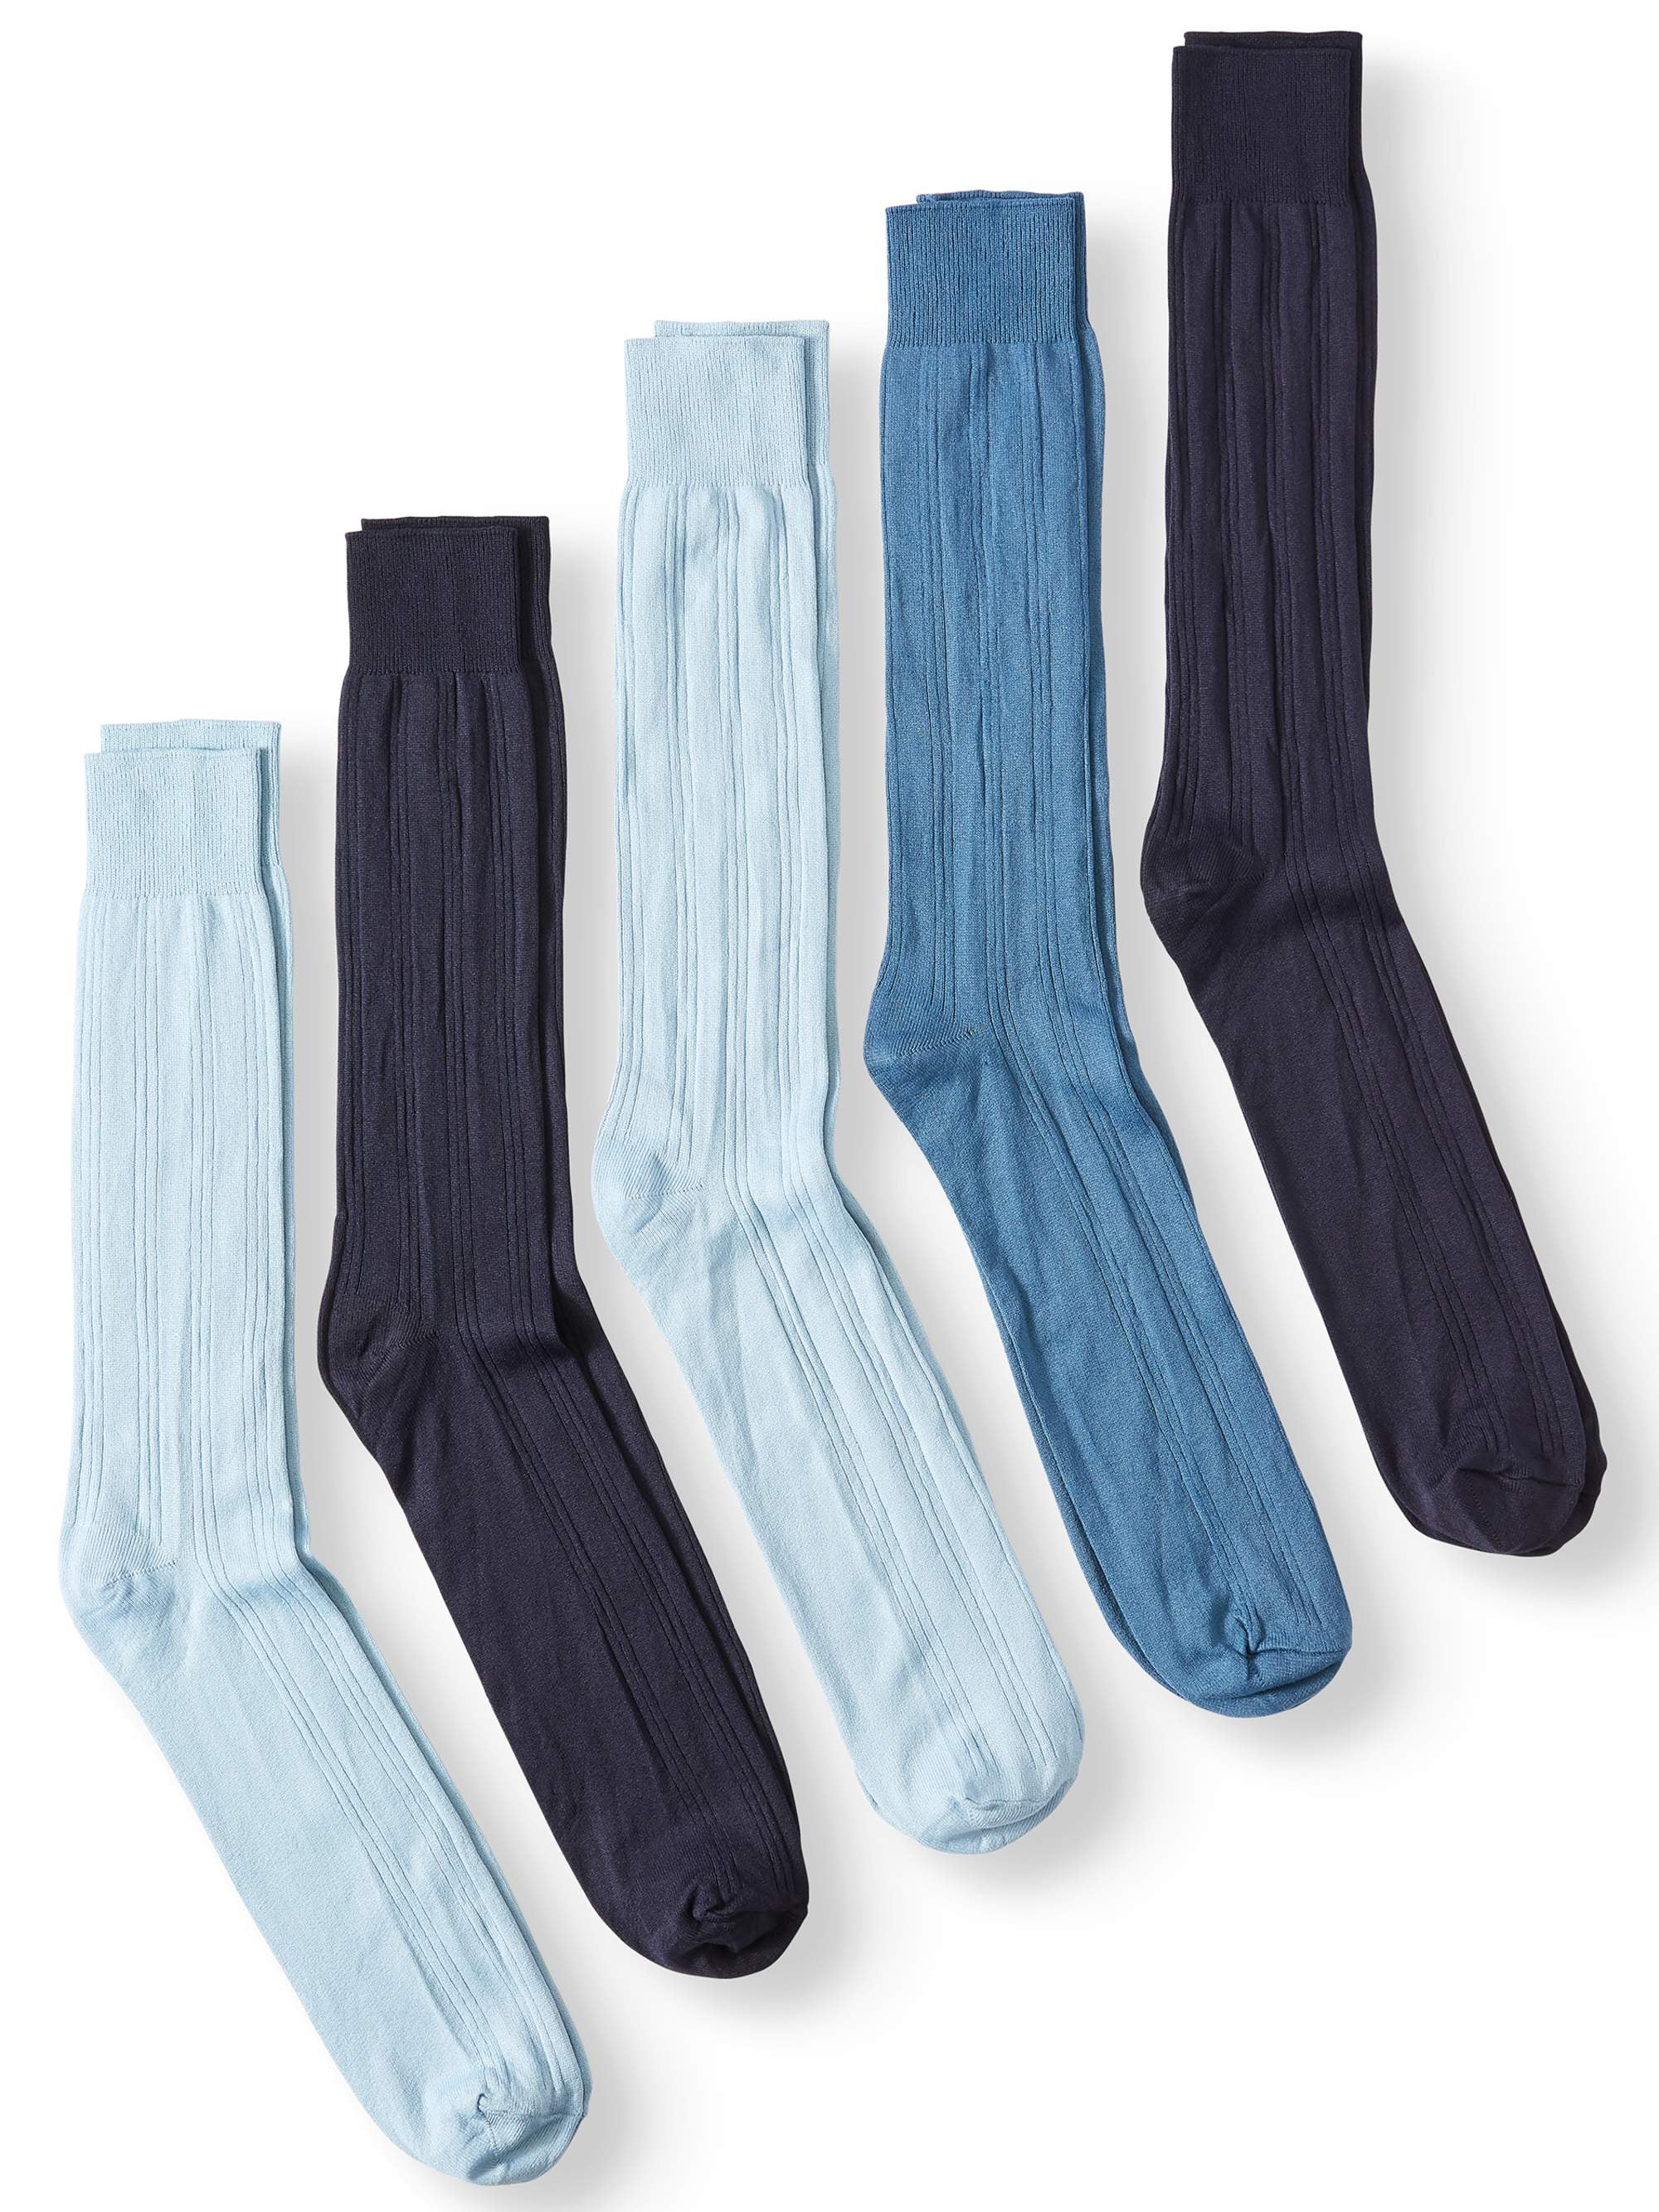 Mens Big Foot Socks Cotton Lycra Blend Office Work Wear Suit Sock Big Feet 11-14 